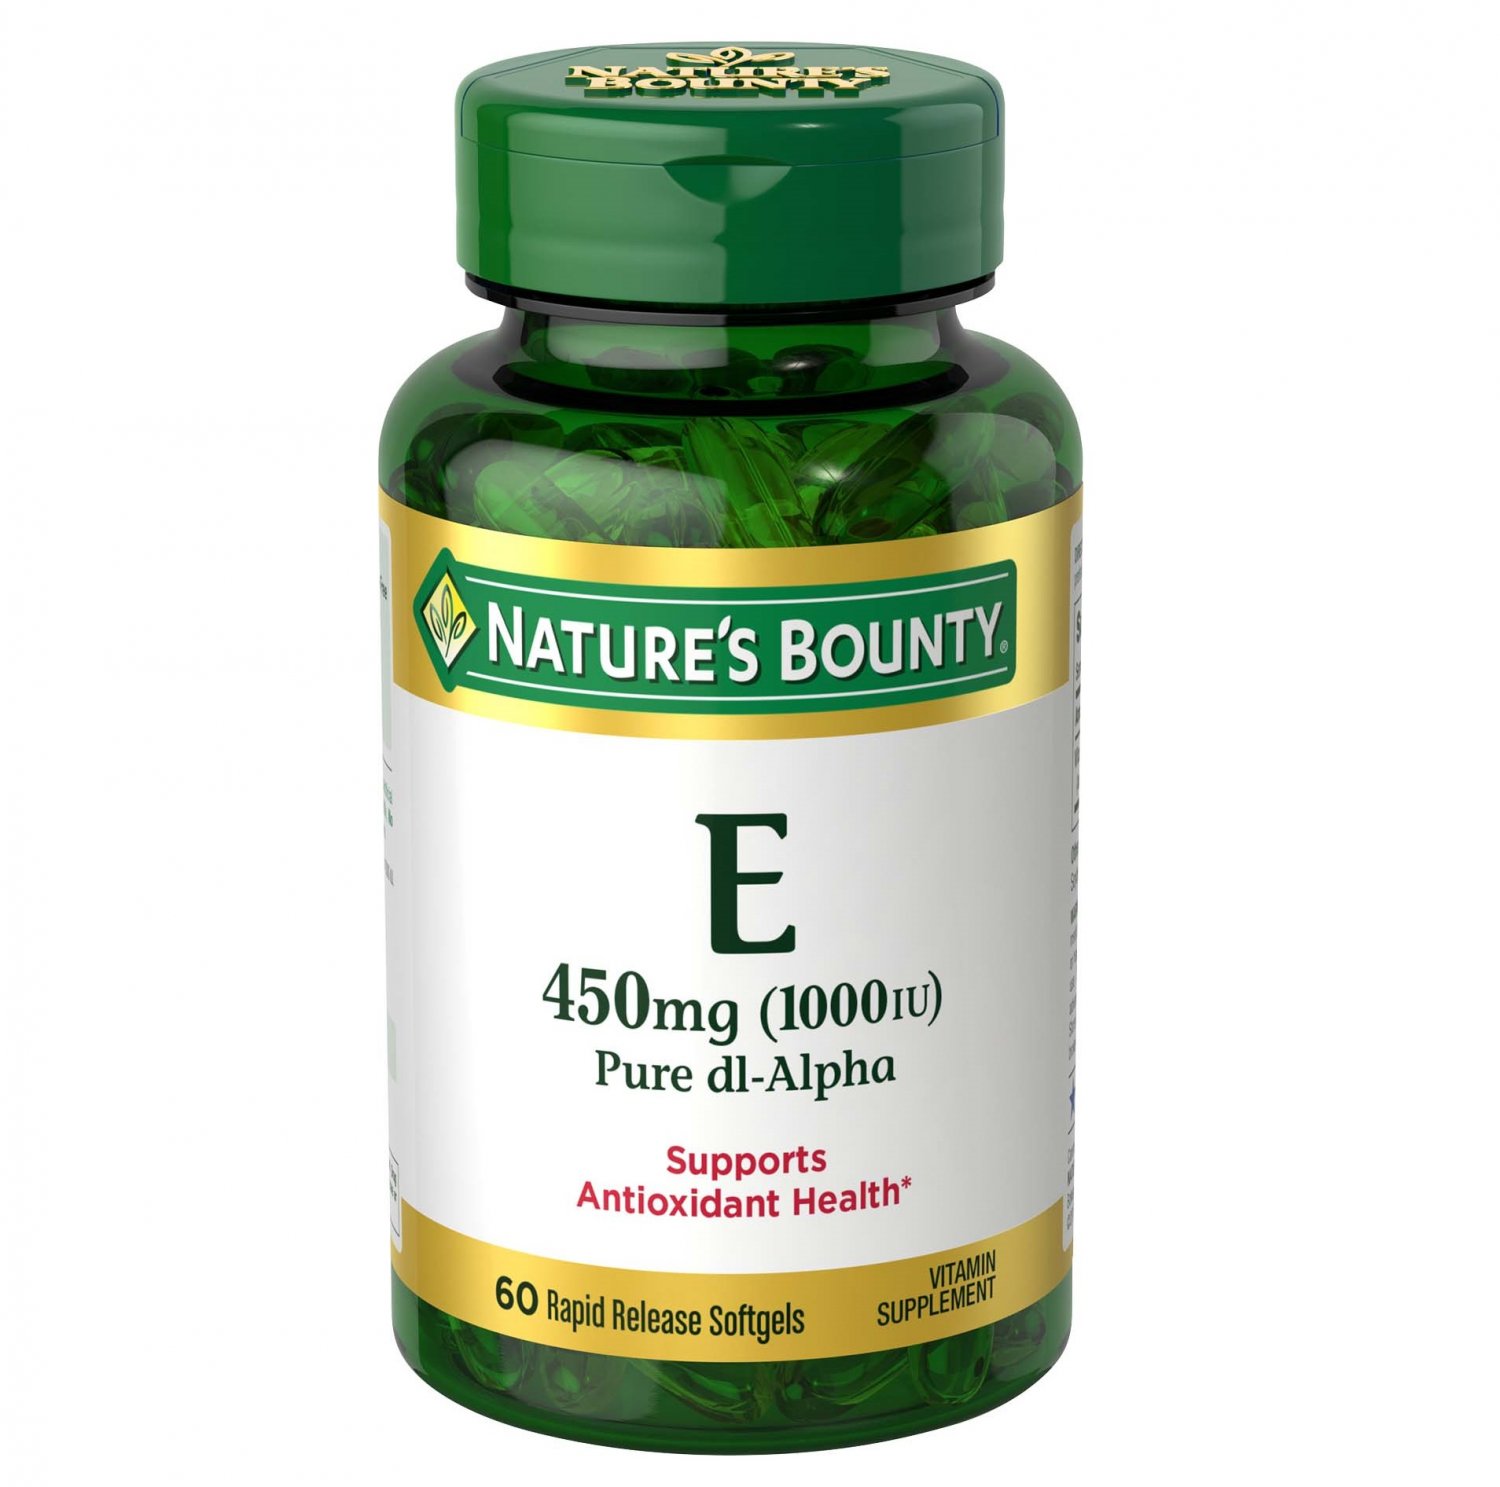 Nature's Bounty Vitamin E Softgels 450 Mg, Antioxidant Health 60 Count